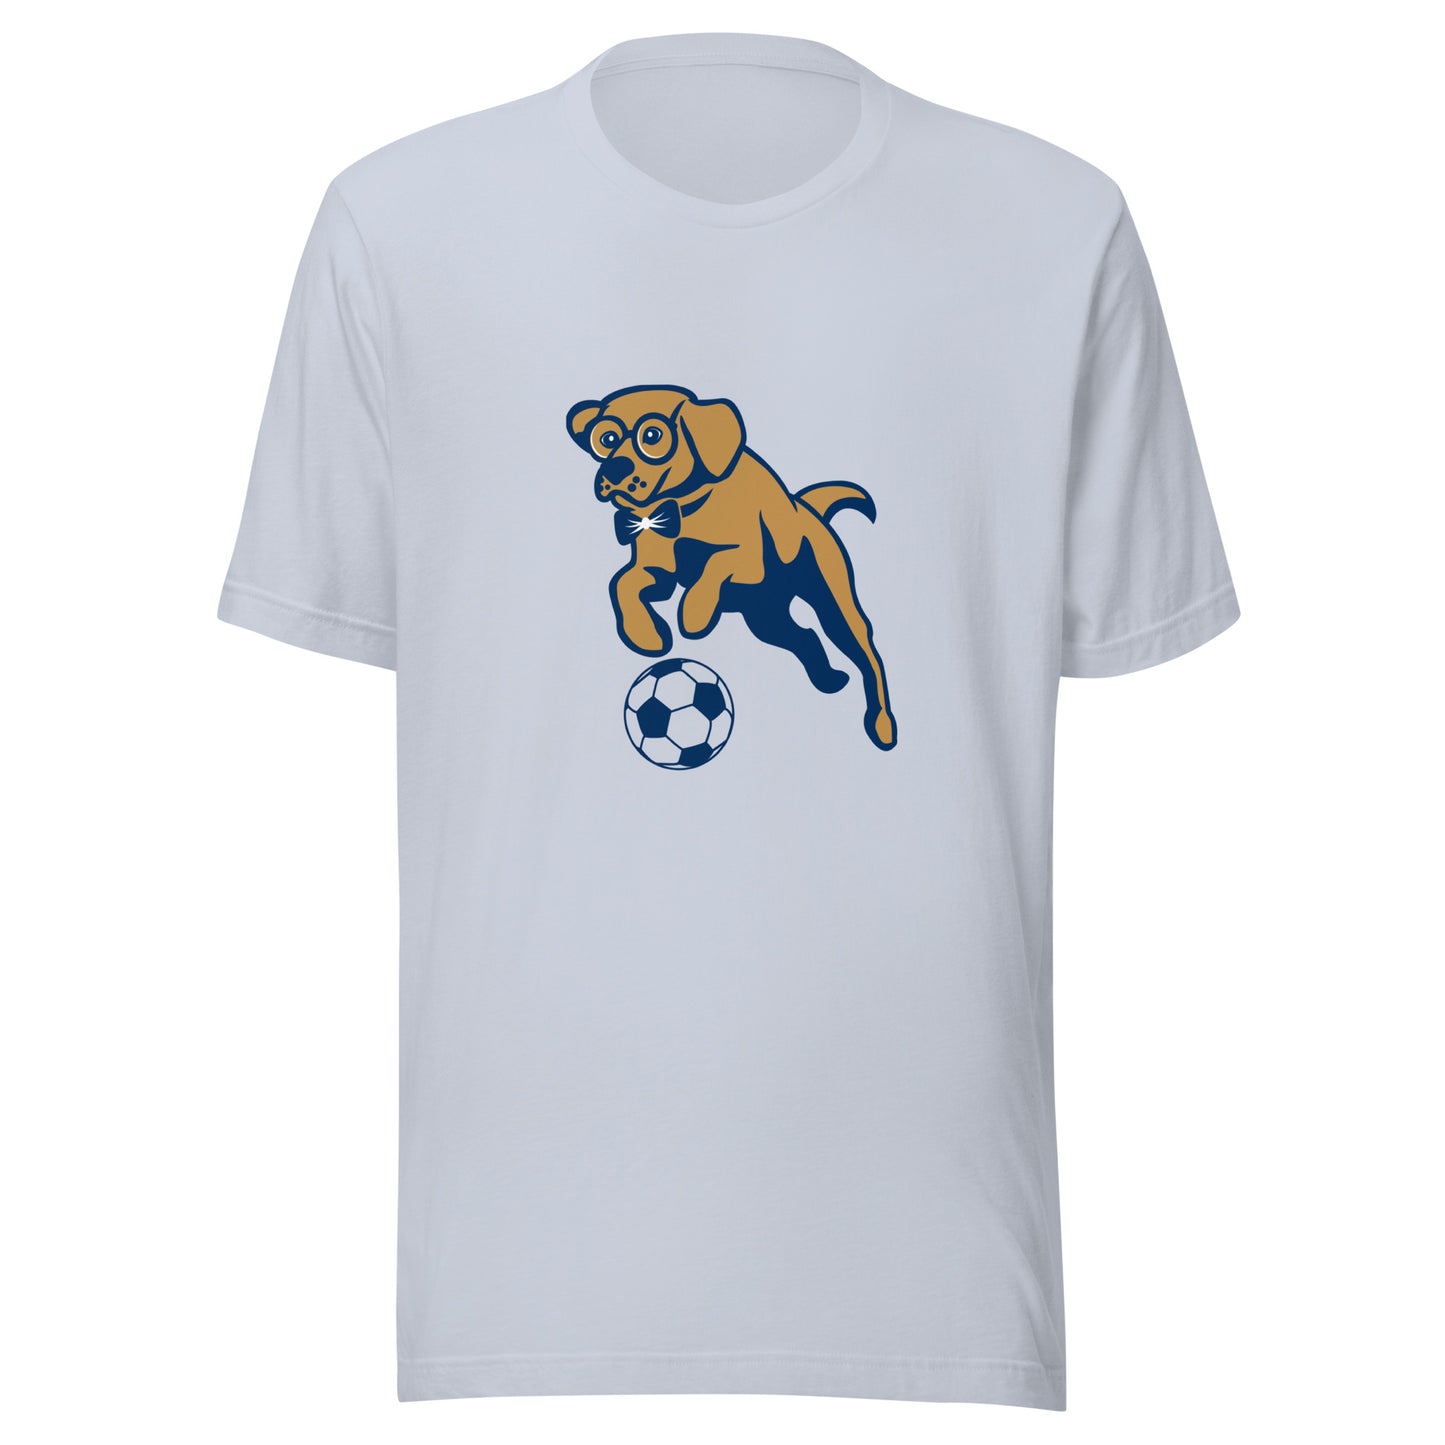 Soccer Sports T-shirt